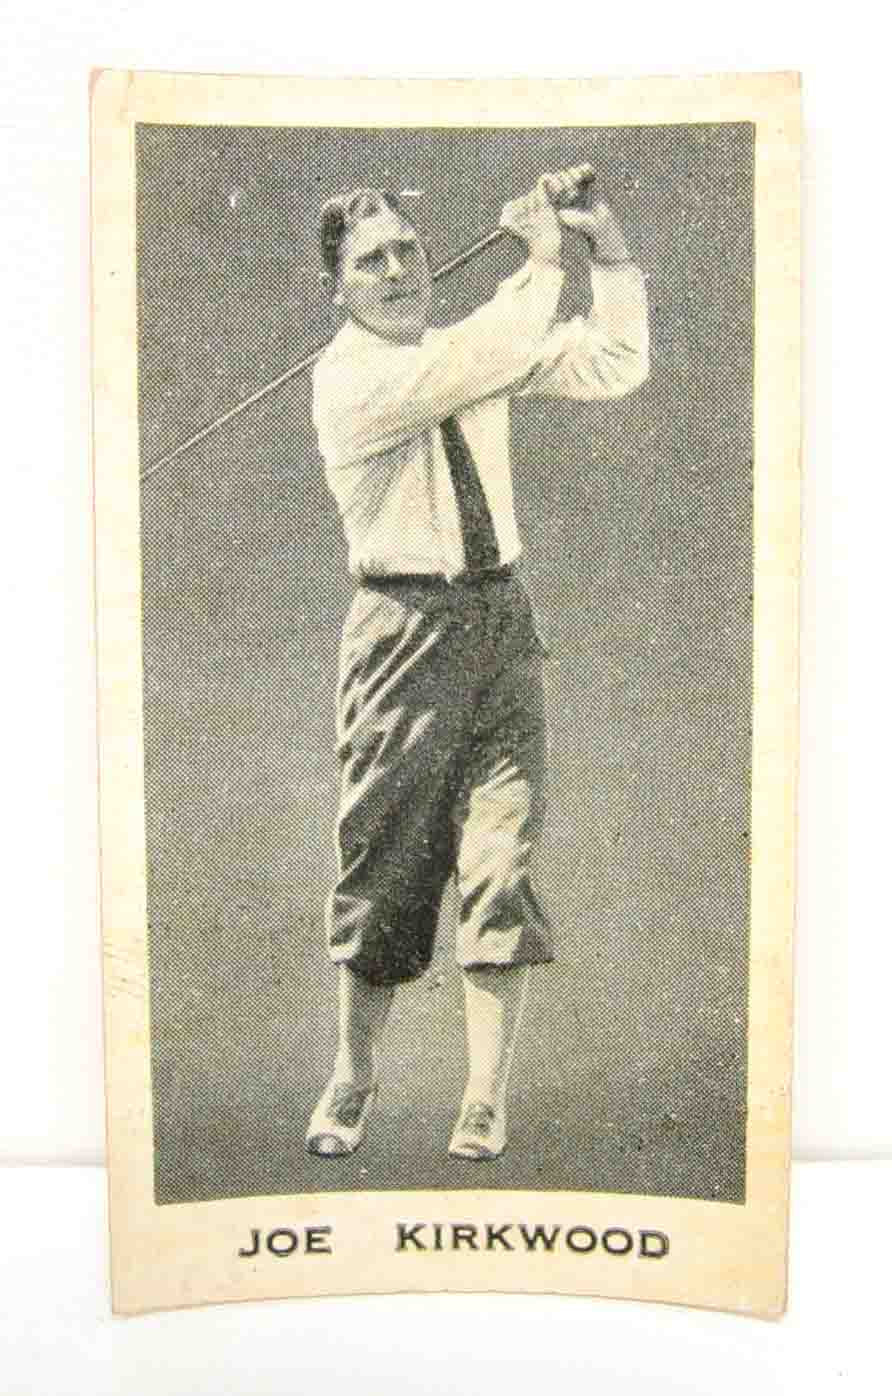 Cigarette card Joe Kirkwood #7 in a series of Australian Sporting celebrities issued by Godfrey Phillips.